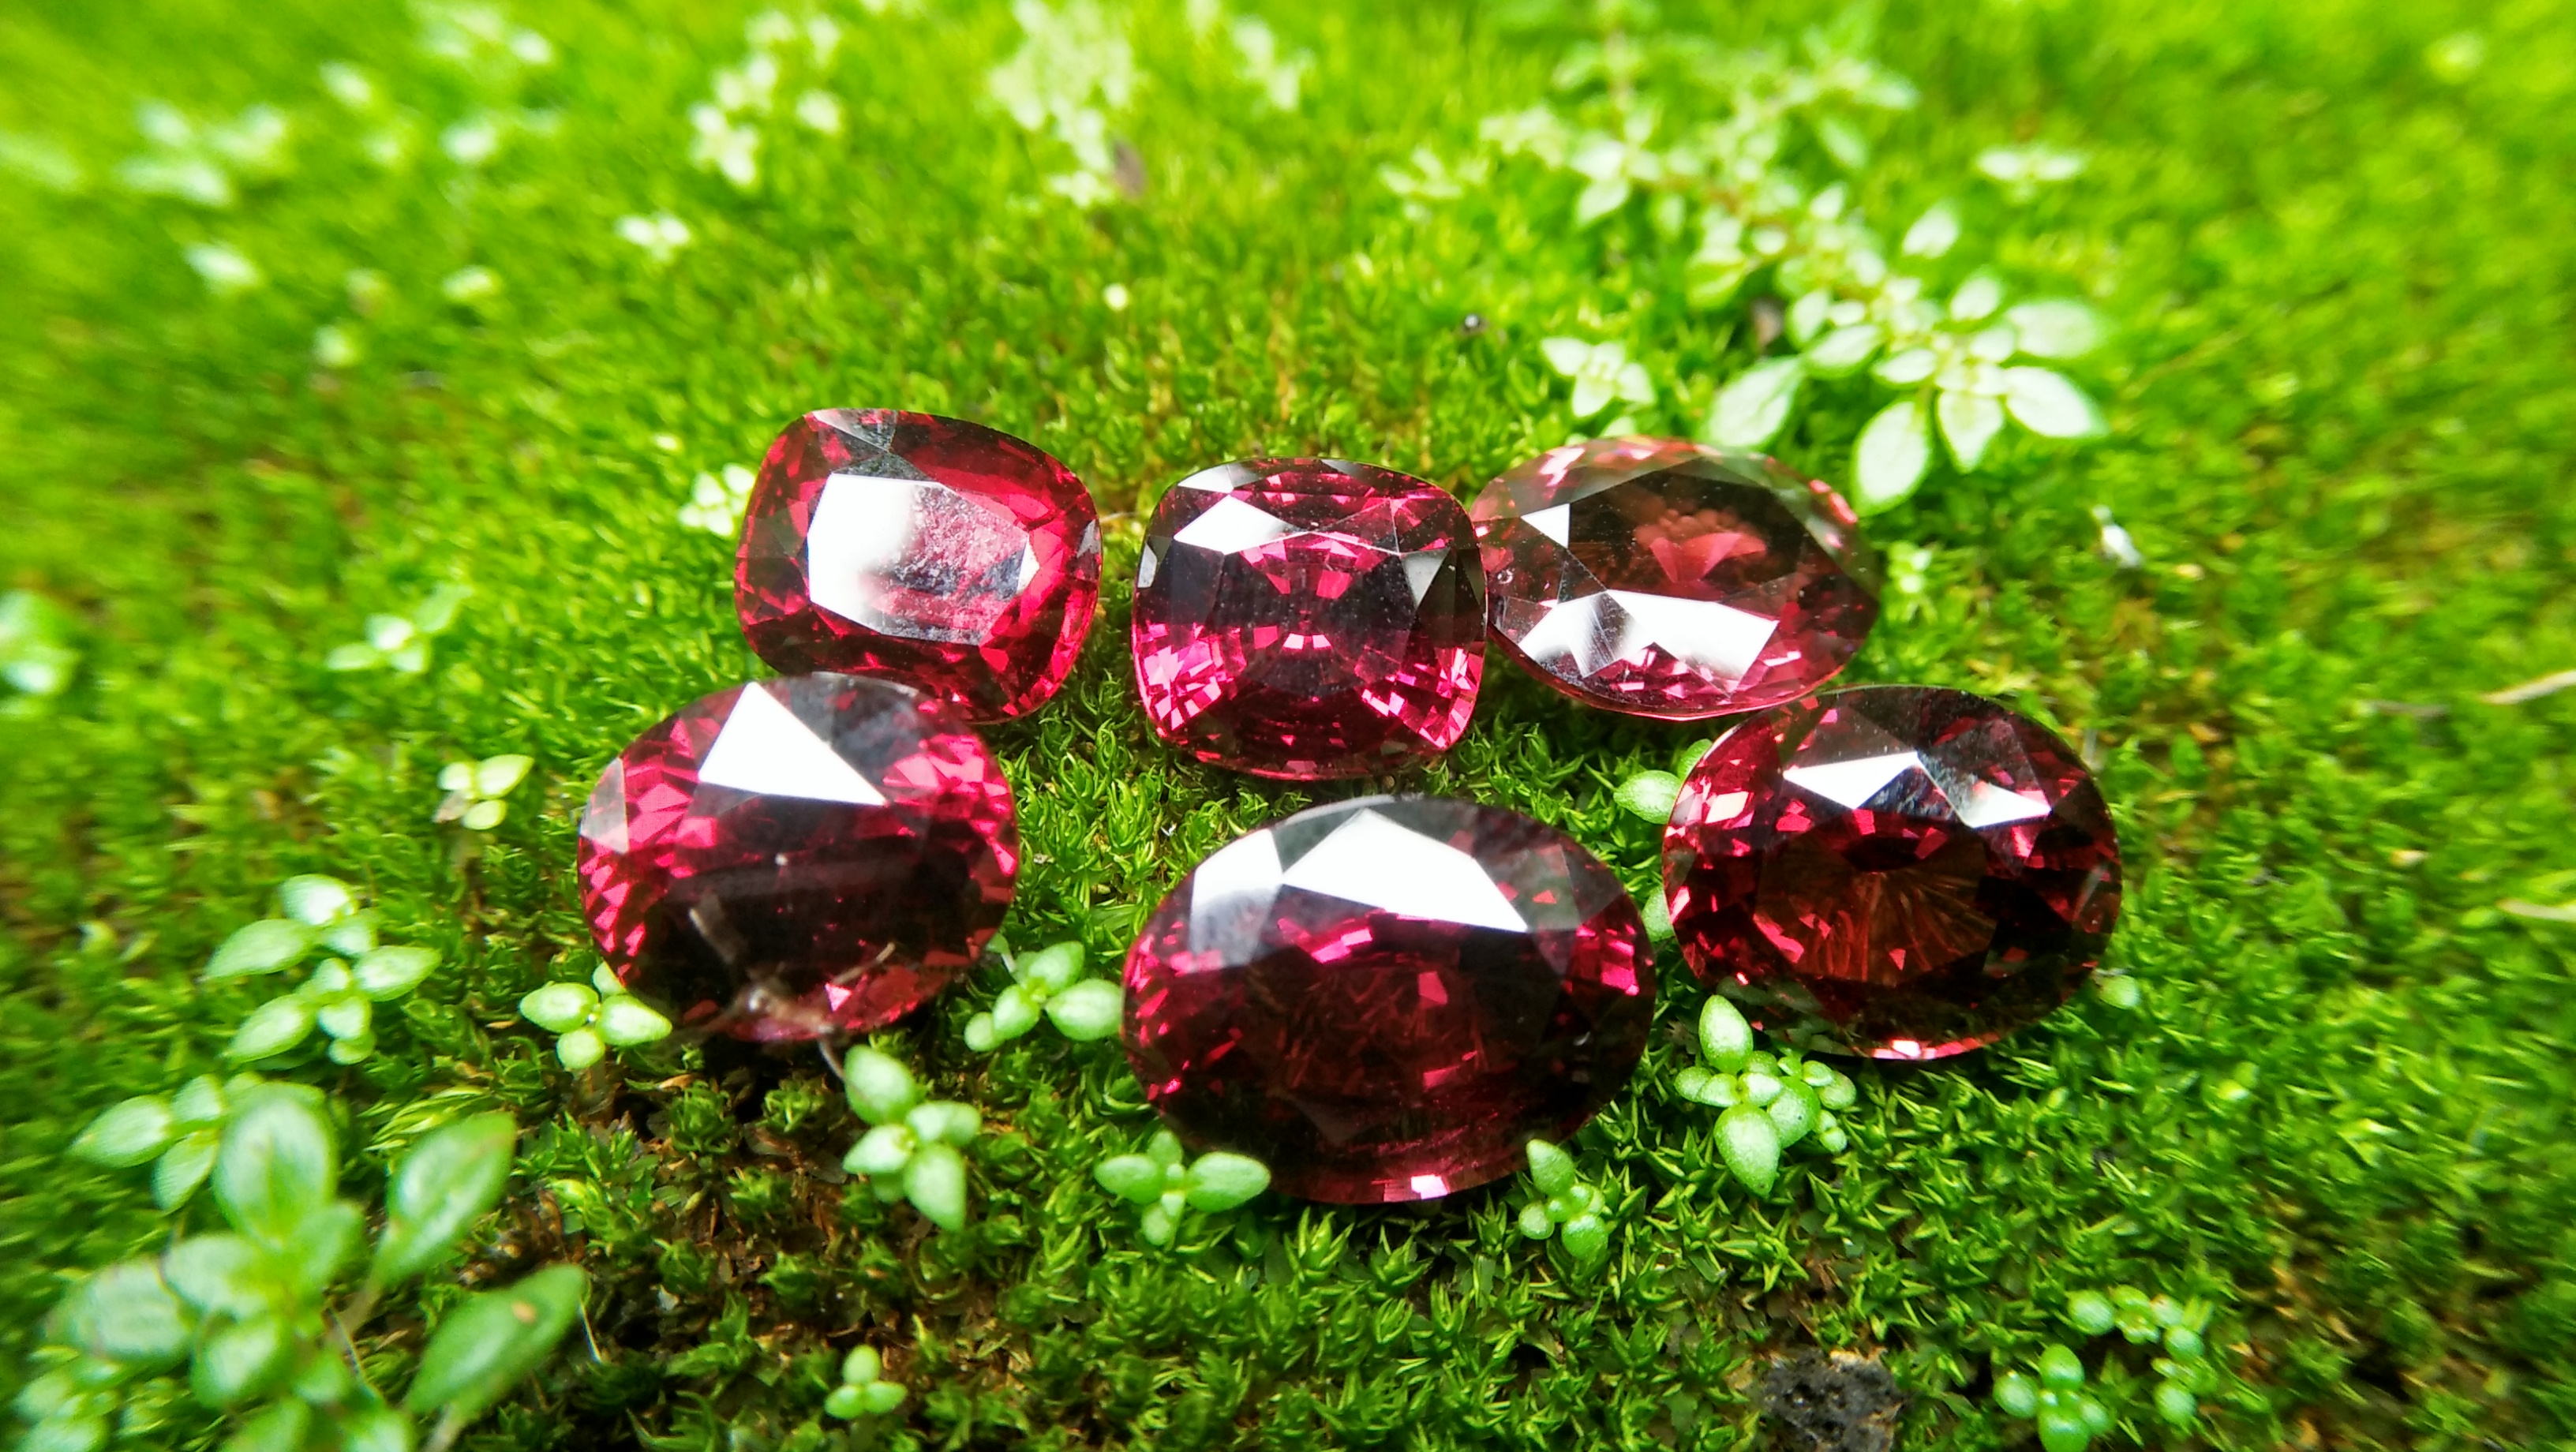 Ceylon Natural Rhodolite Garnets Dimension: 9.4mm x 8.2mm x 7.6mm/ 9.6mm x 8.8mm x 6.8mm 10mm x 8.7mm x 6.5mm/ 10.5mm x 9.4mm x 6.8mm 13mm x 9.8mm x 5.9mm/ 11.9mm / 10mm x 4.8mm Weights: 5.30cts/ 5.45cts/ 5.60cts/ 6.20cts/ 6.80cts/ 4.85cts Mineral: City of gem Ratnapurea Sri Lanka Shapes: Ovel and Cution Colour: Pinkish Red Pieces: 6 Treatment: NO Treatment/Unheated/Natural